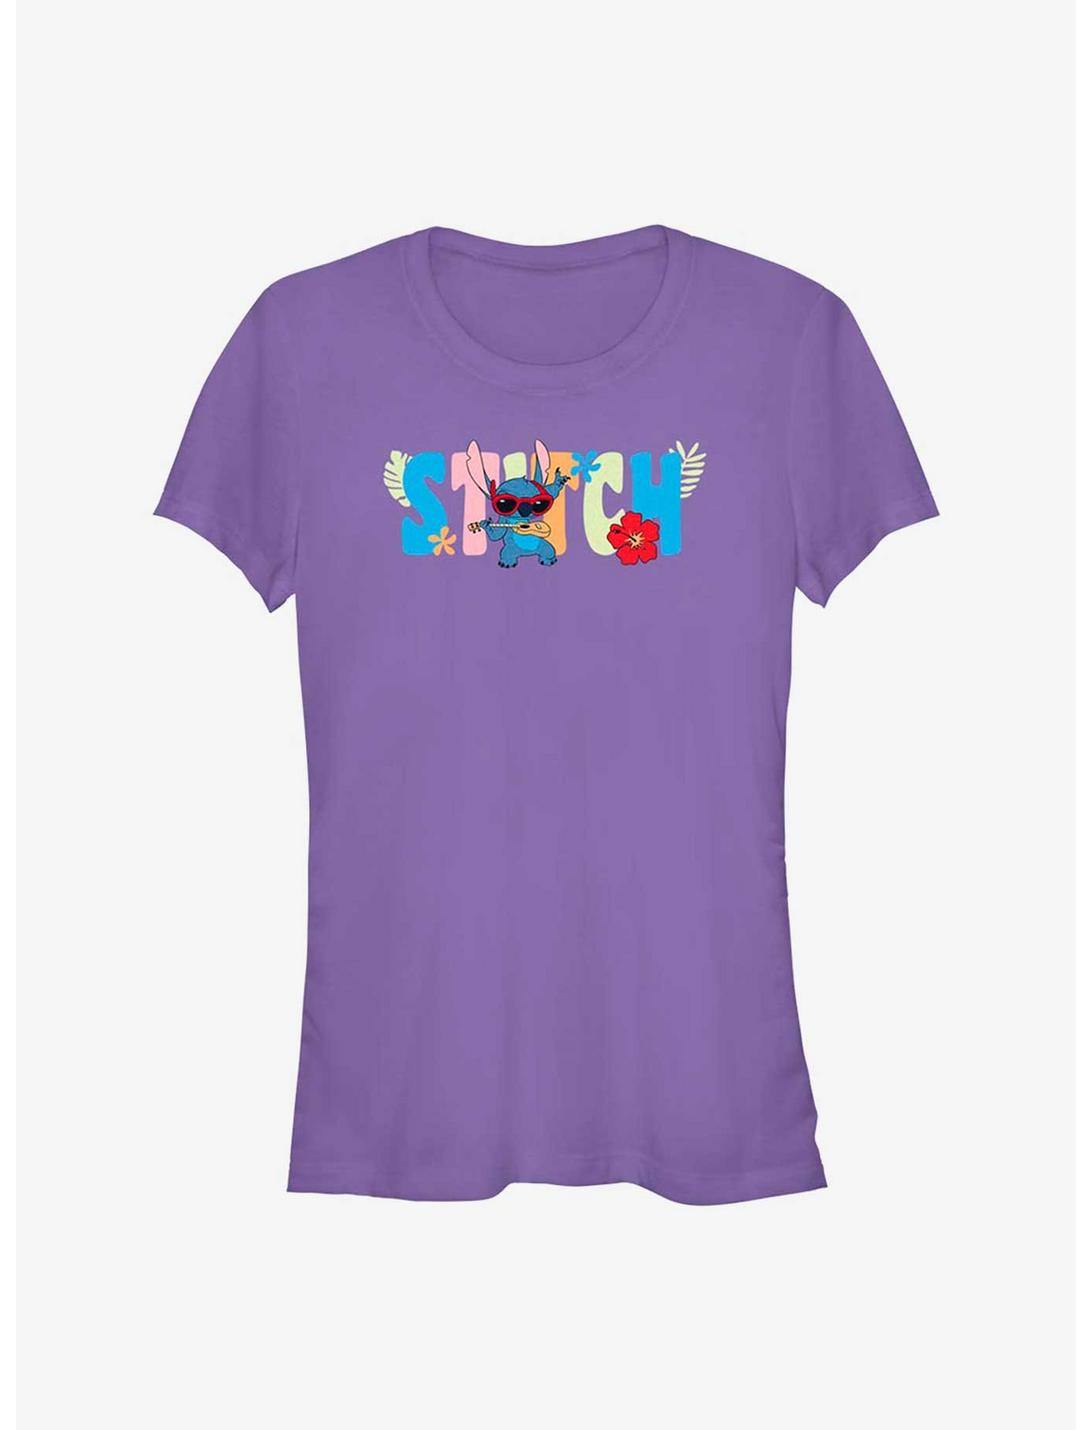 Dsny Lilo Stch Stitch Tropic Shades Girls T-Shirt, PURPLE, hi-res